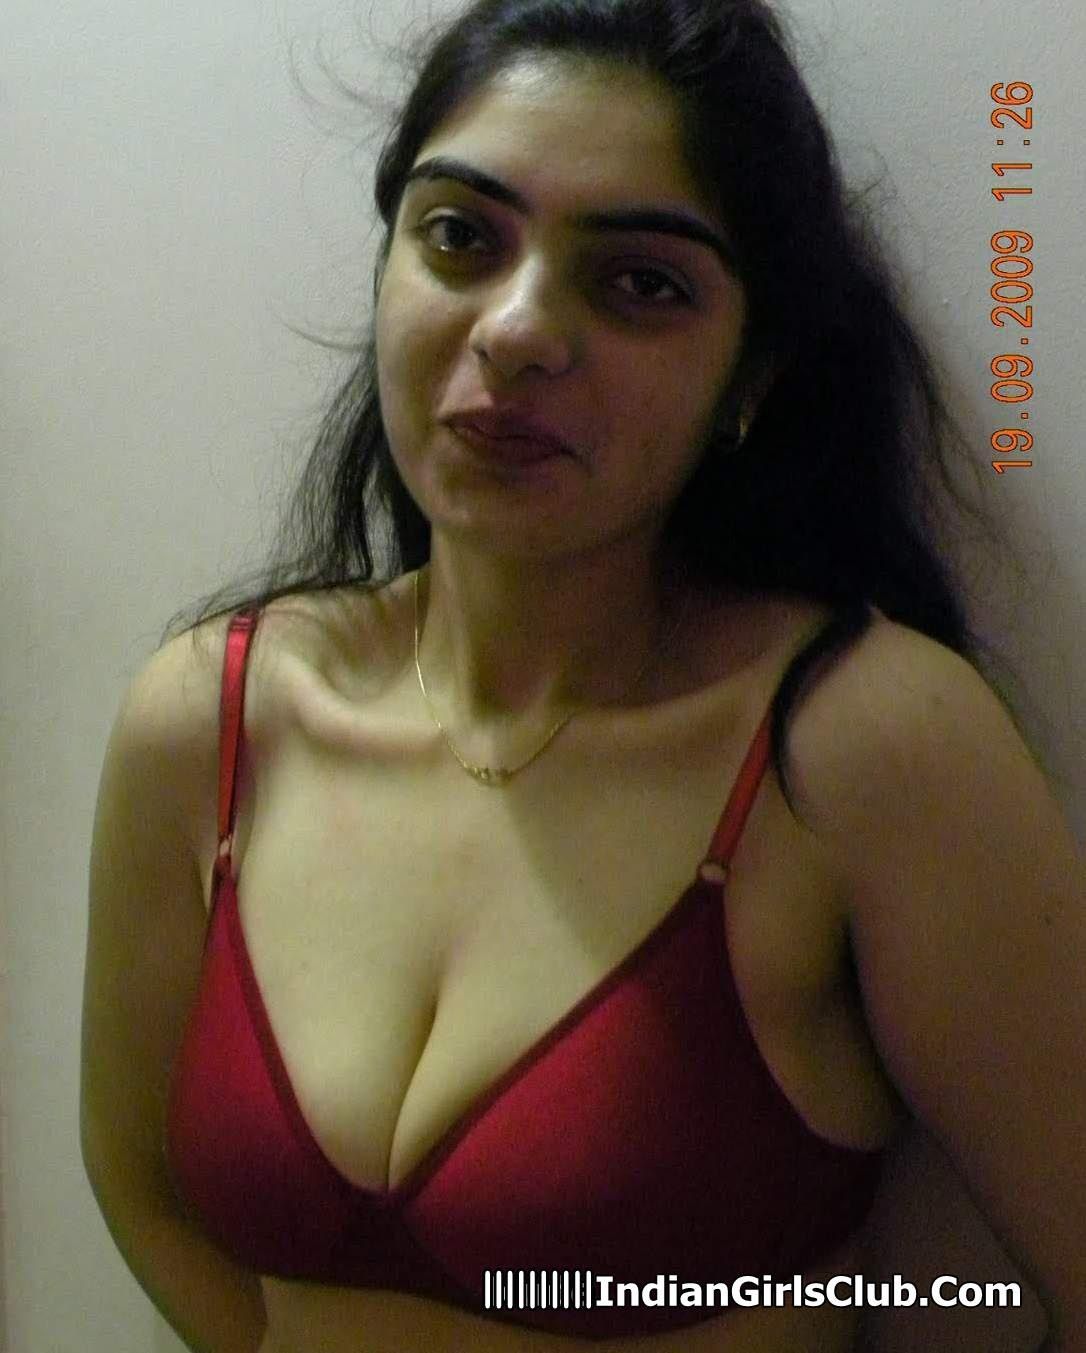 Pakistan girl weathere nakes pics